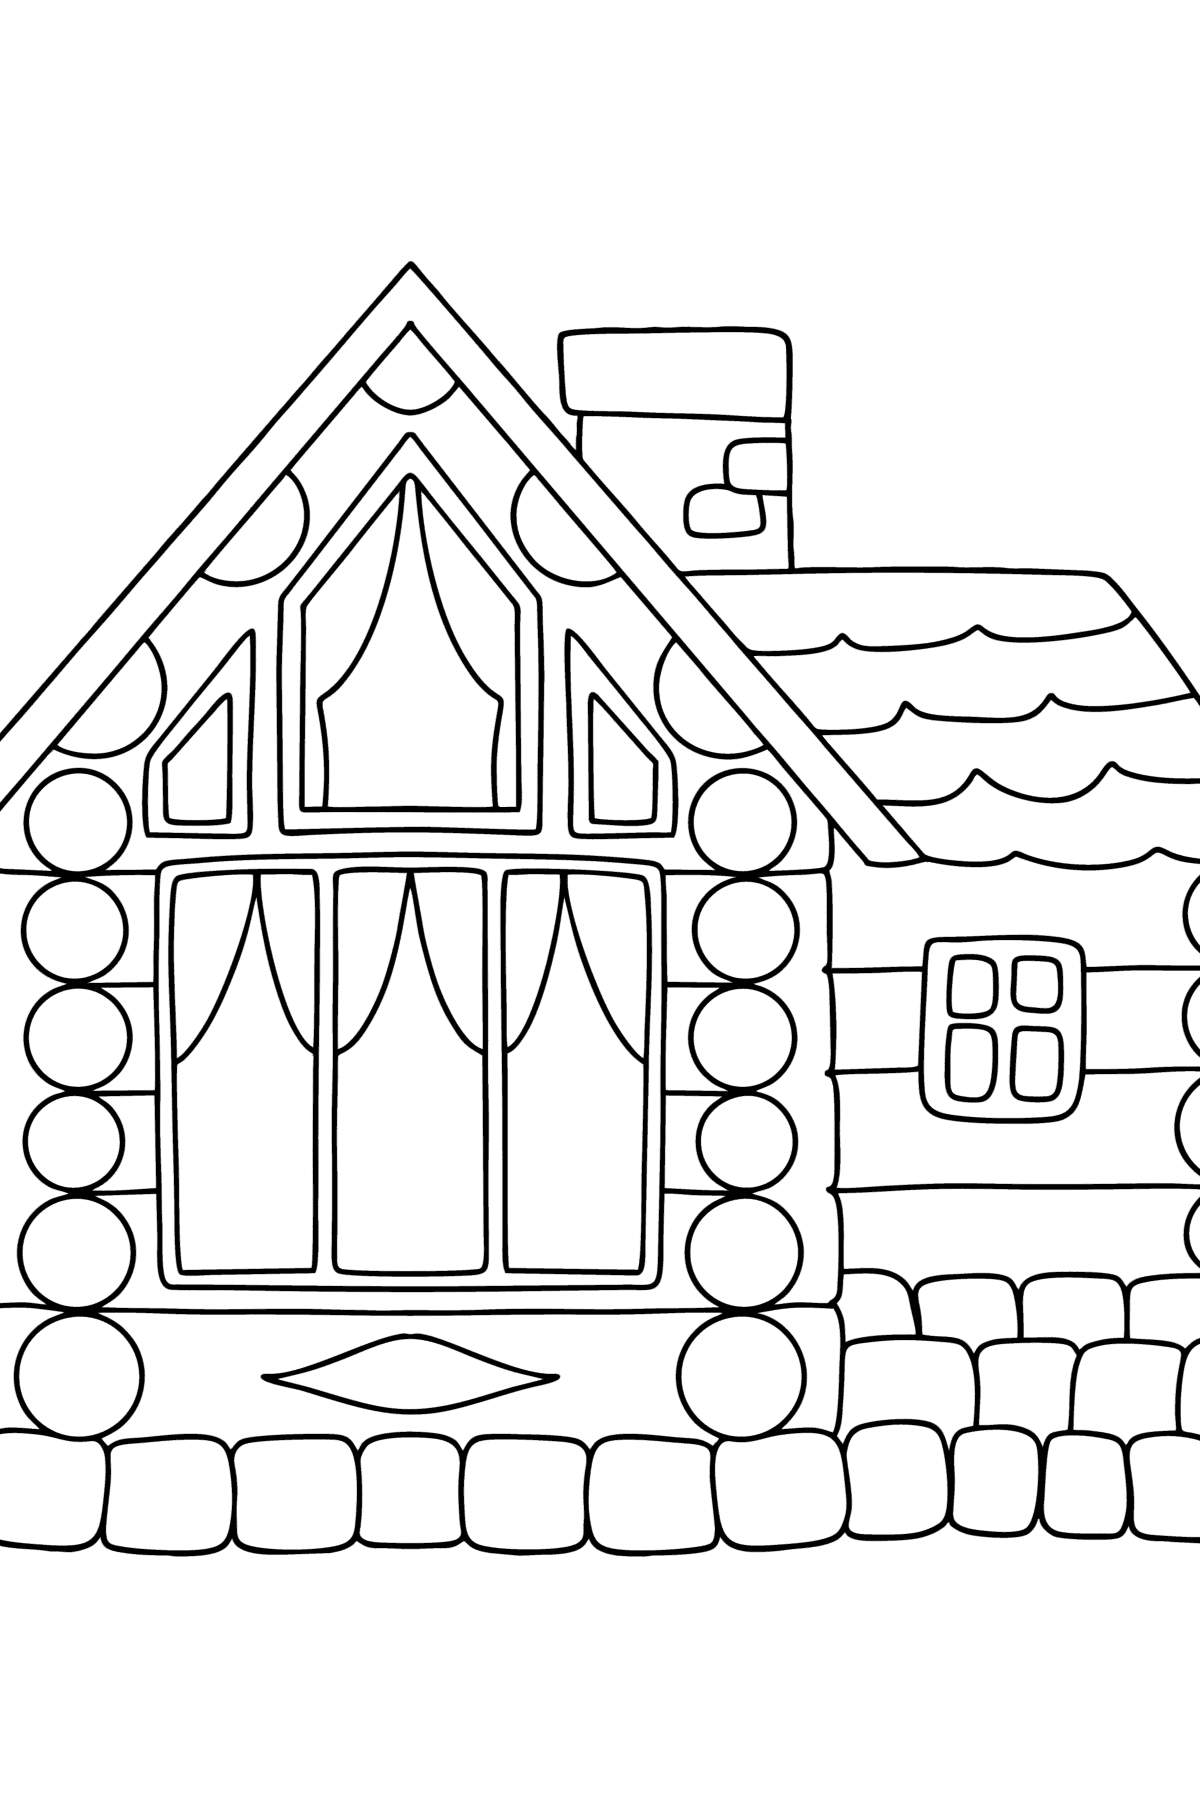 Dibujo de Cabaña de troncos para colorear - Dibujos para Colorear para Niños